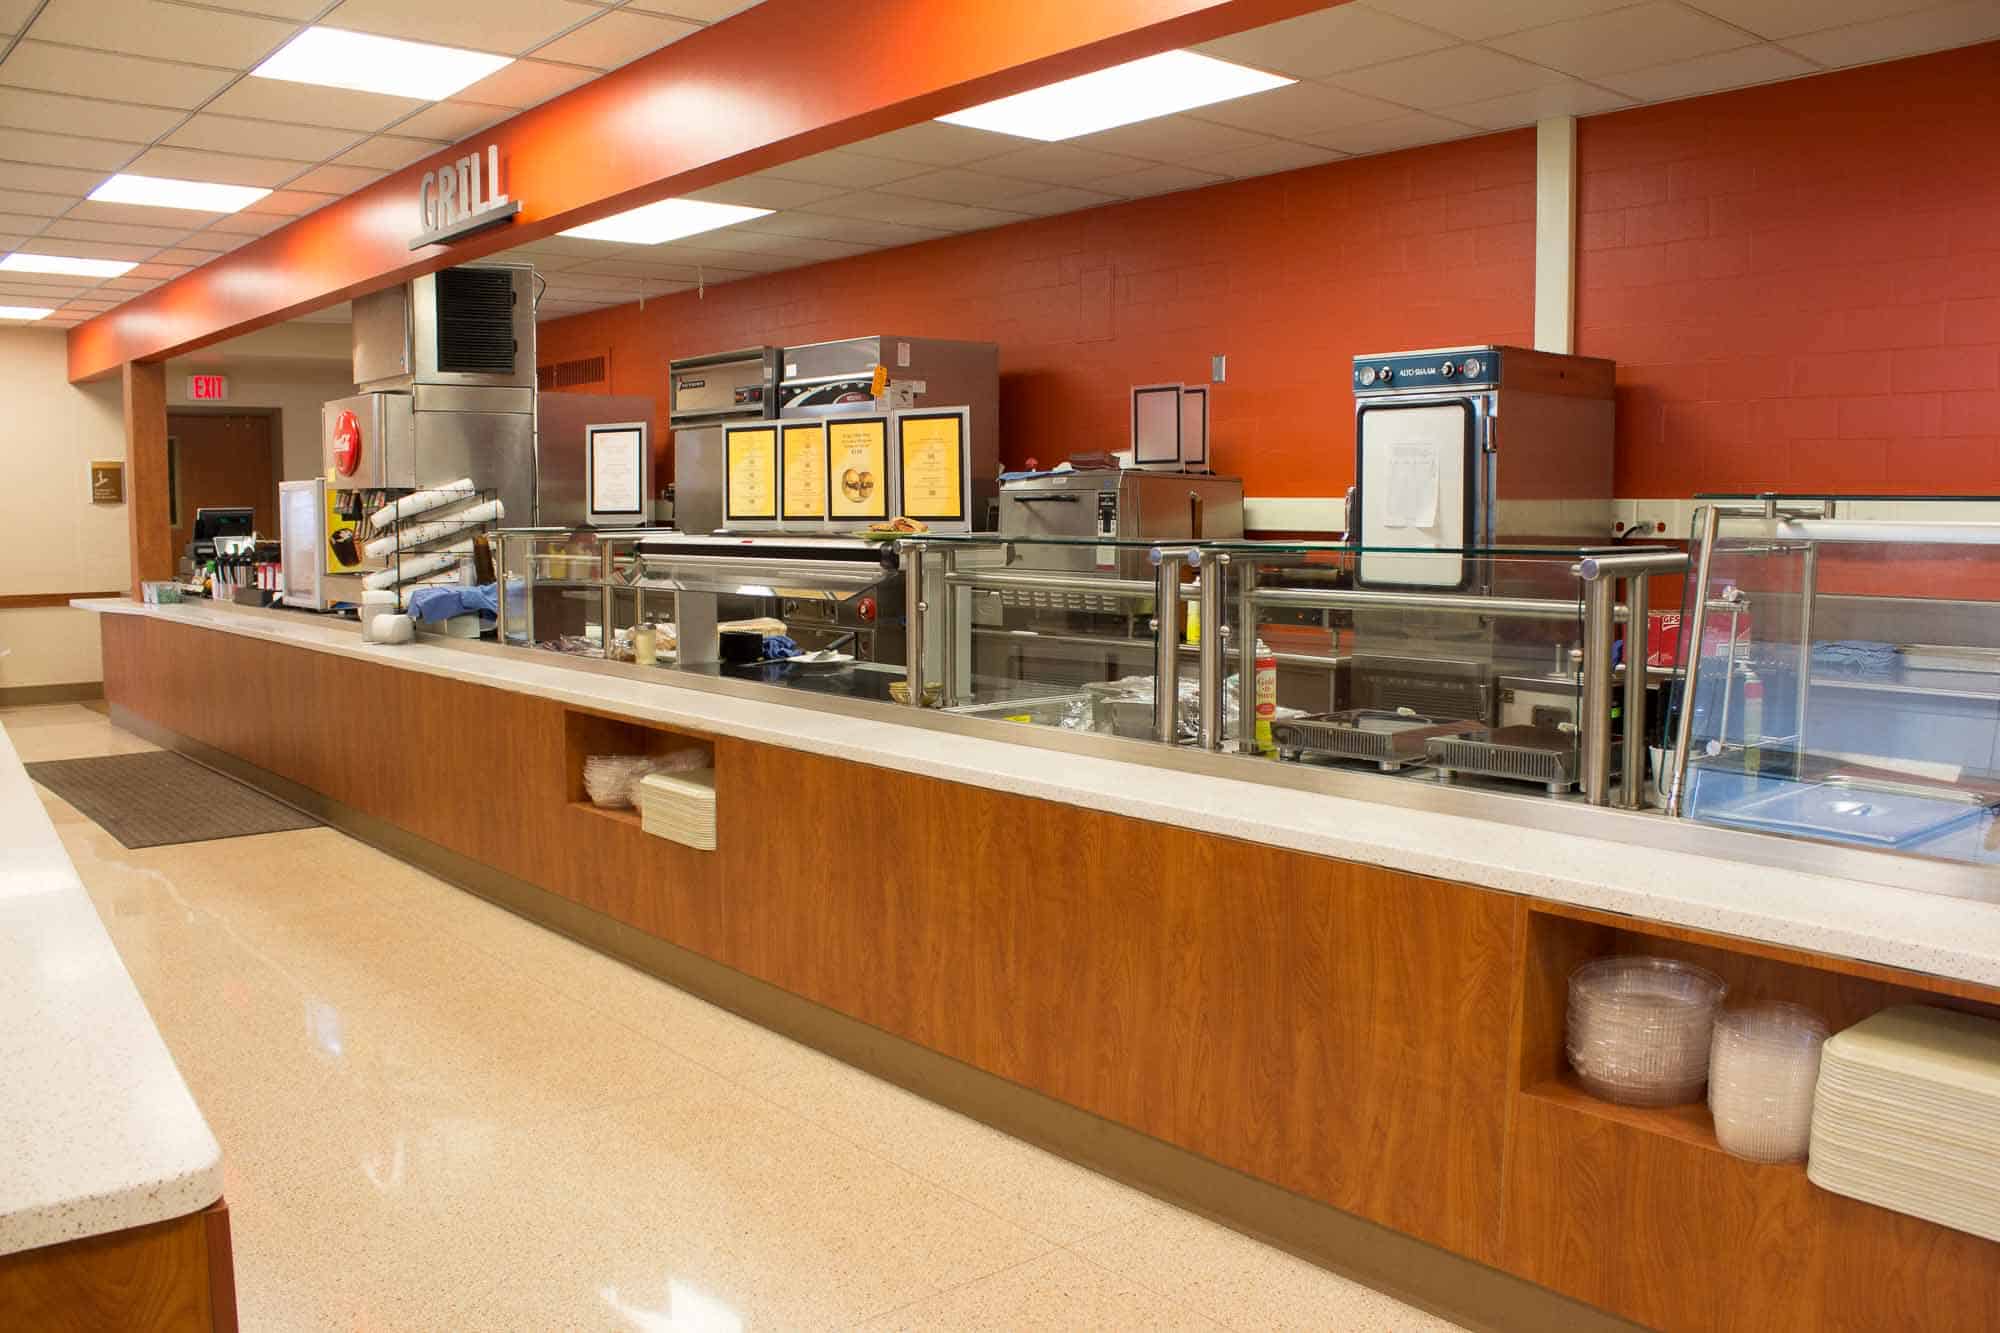 IEI General Contractors Additions/Renovations Project – Cafeteria Interior